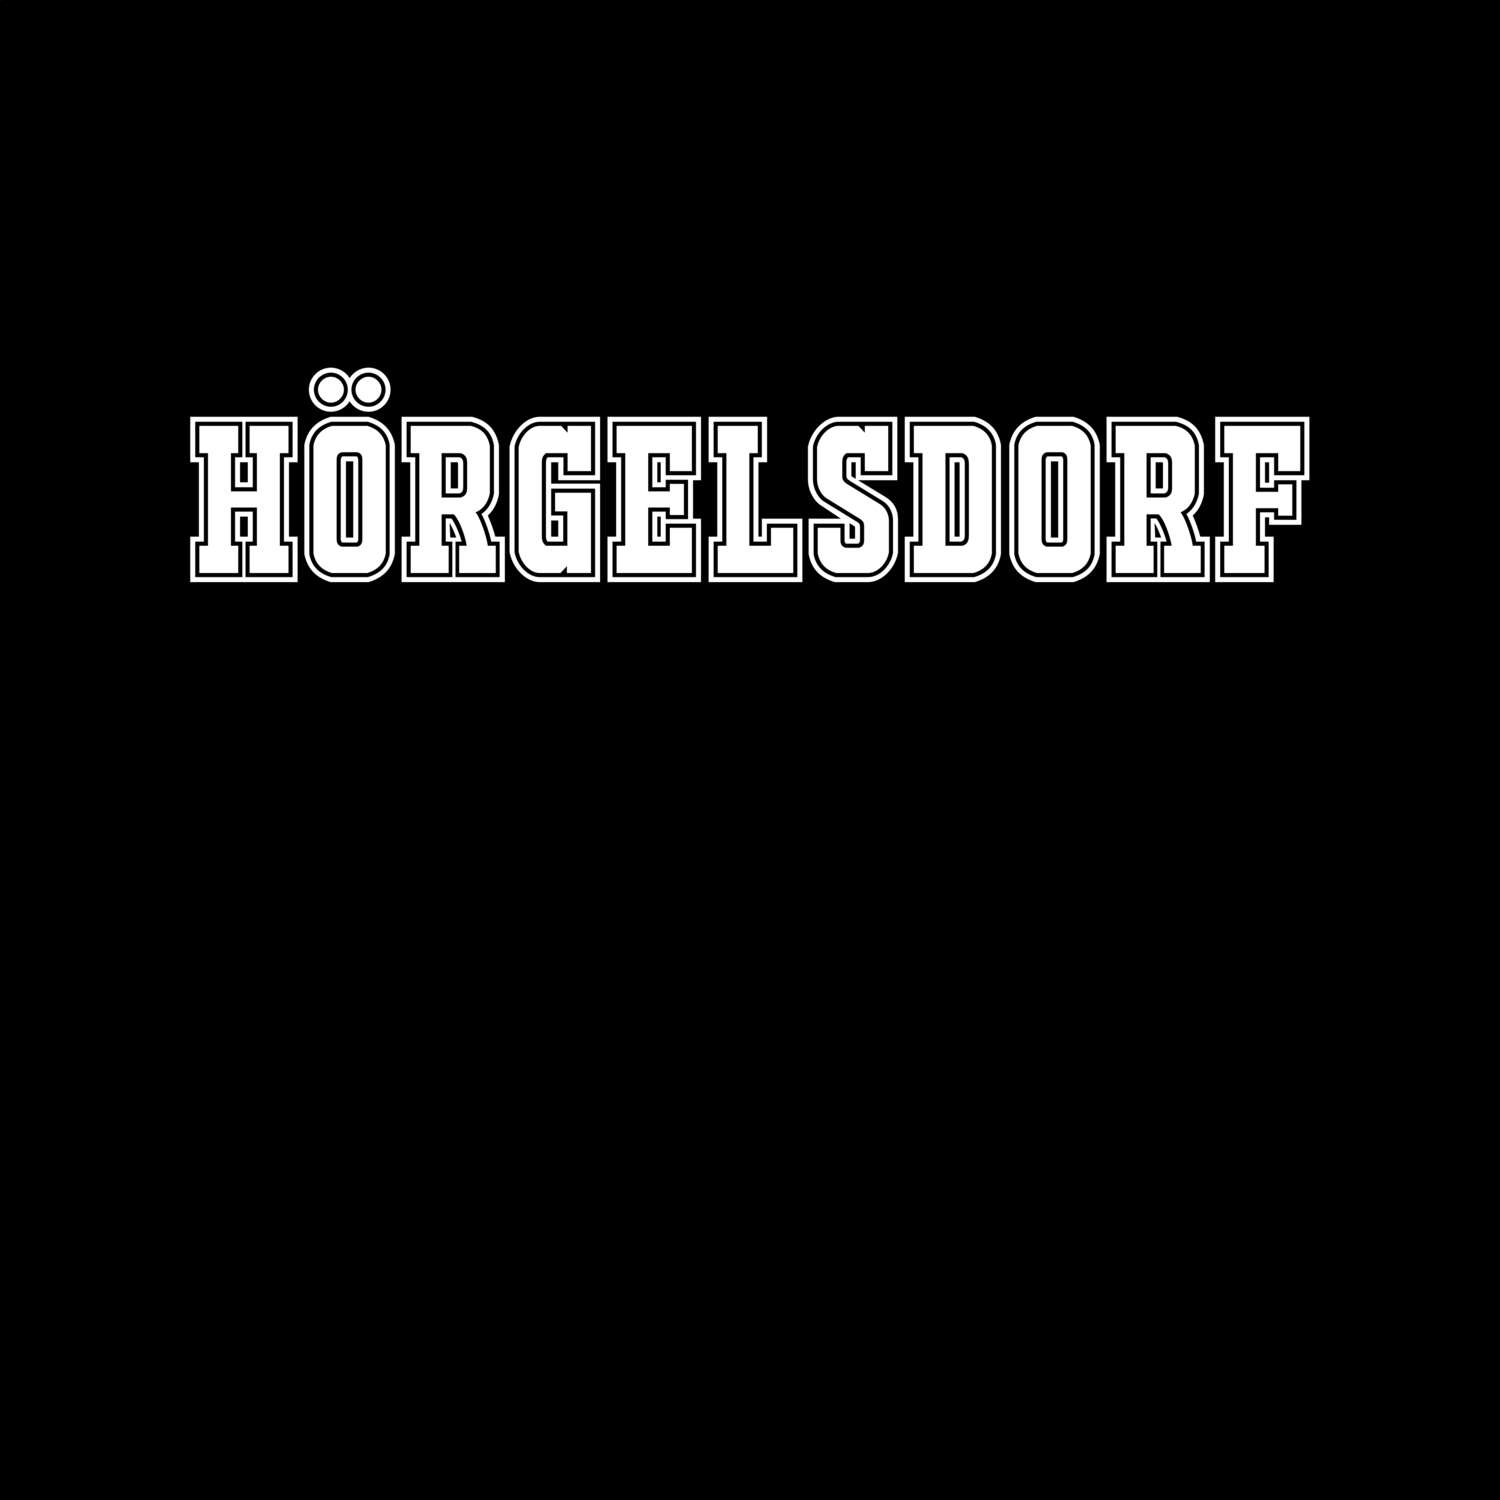 Hörgelsdorf T-Shirt »Classic«